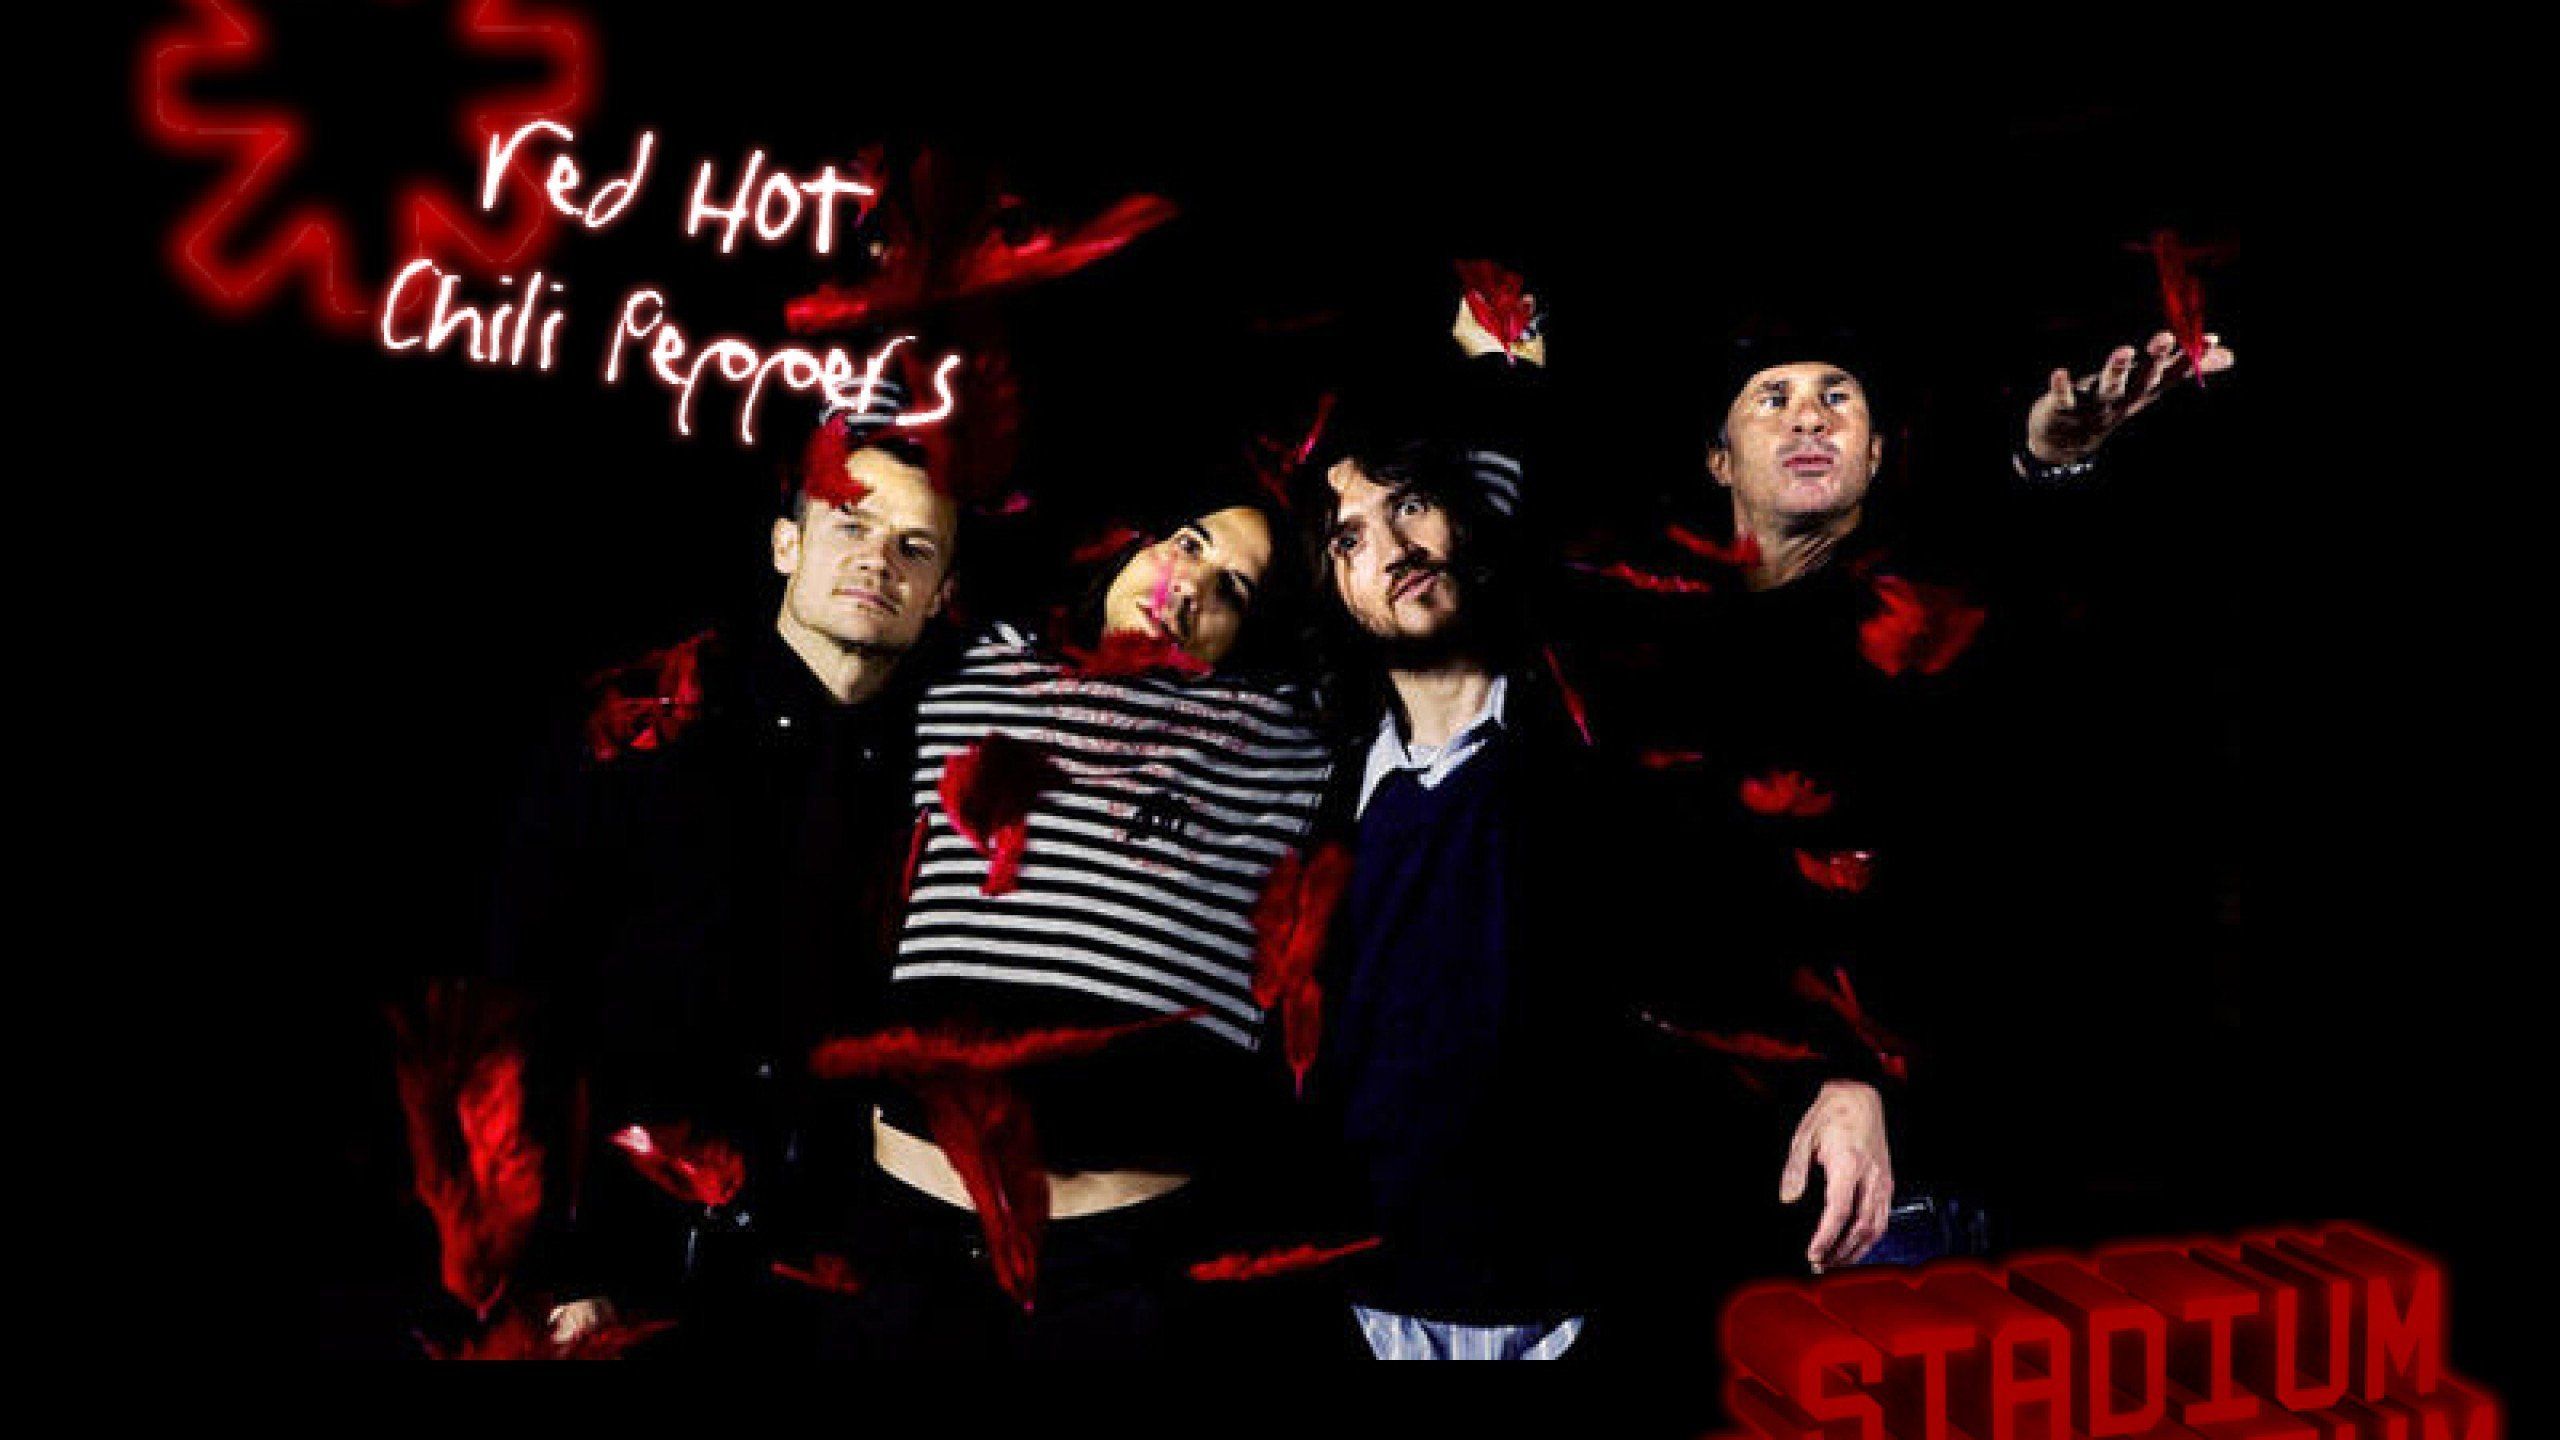 RED HOT CHILI PEPPERS funk rock alternative (50) wallpaper ...